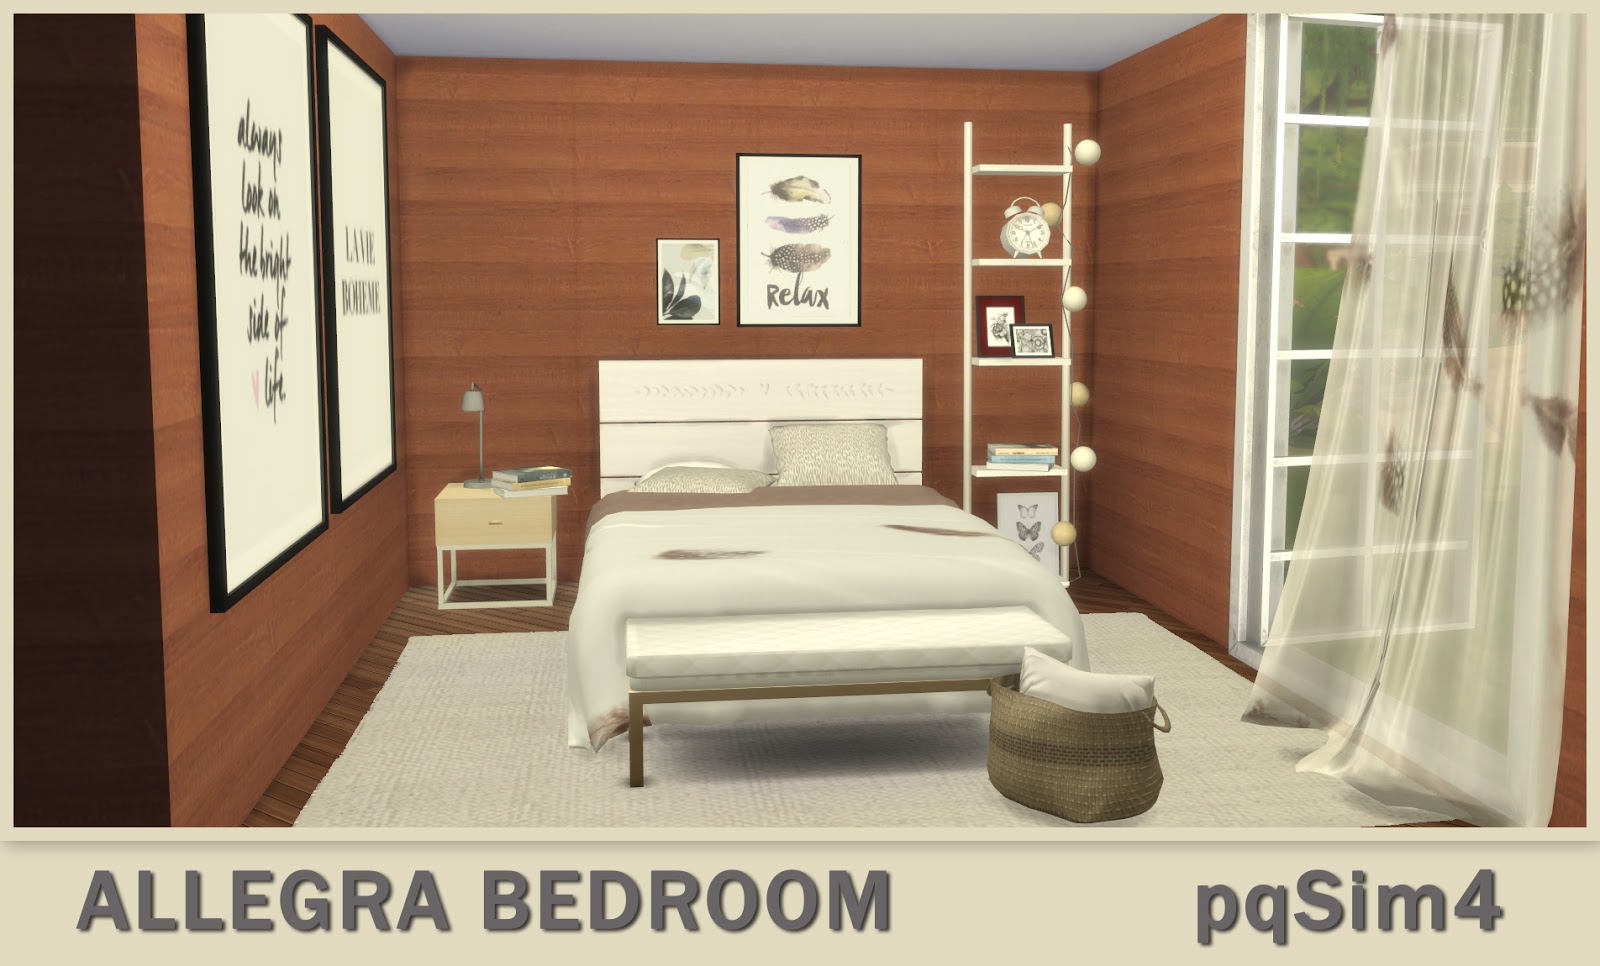 Allegra Bedroom The Sims 4 Custom Content